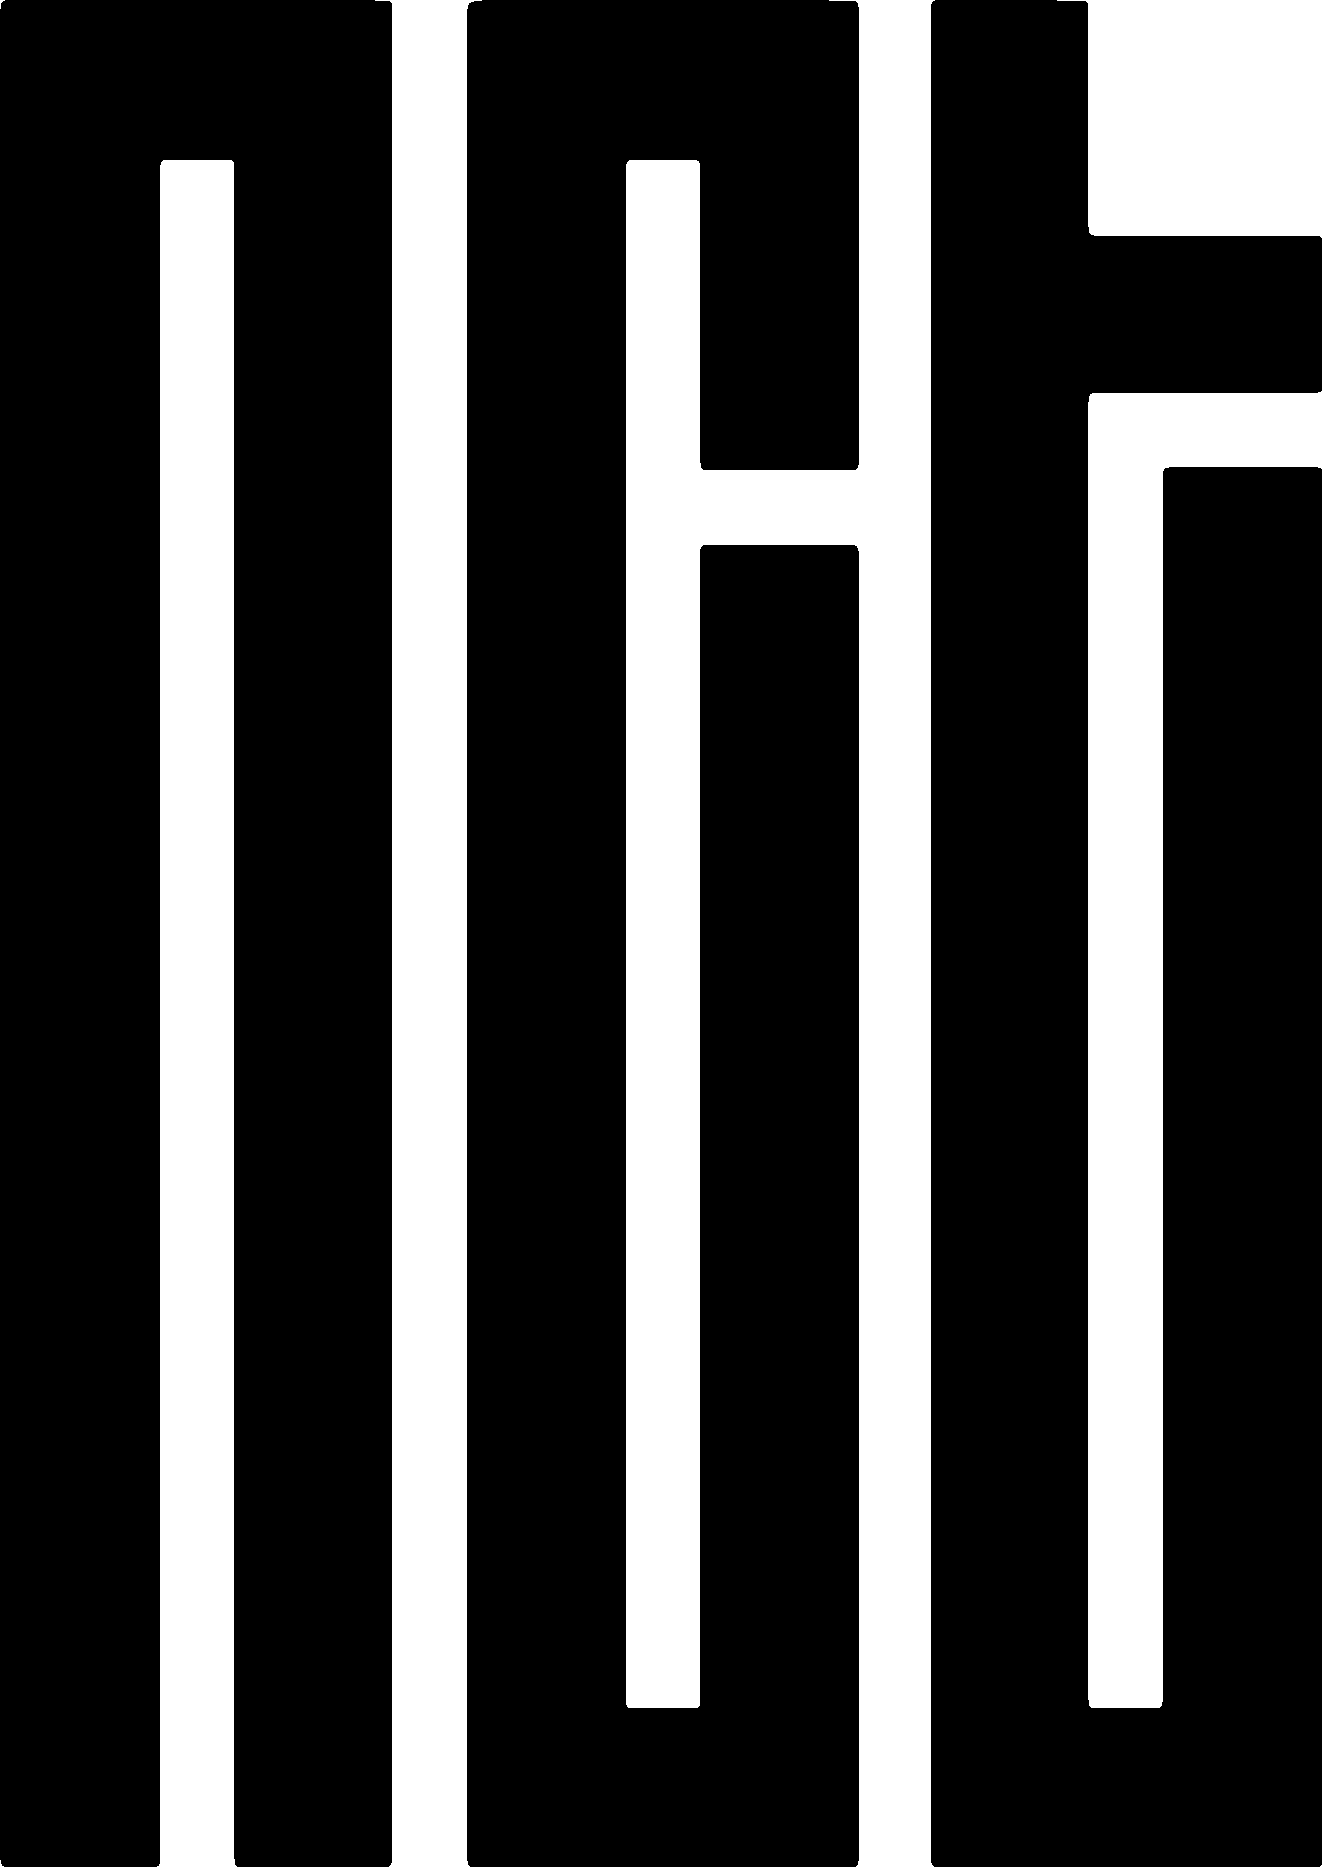 File:NCT Universe Lastart logo.png - Wikimedia Commons